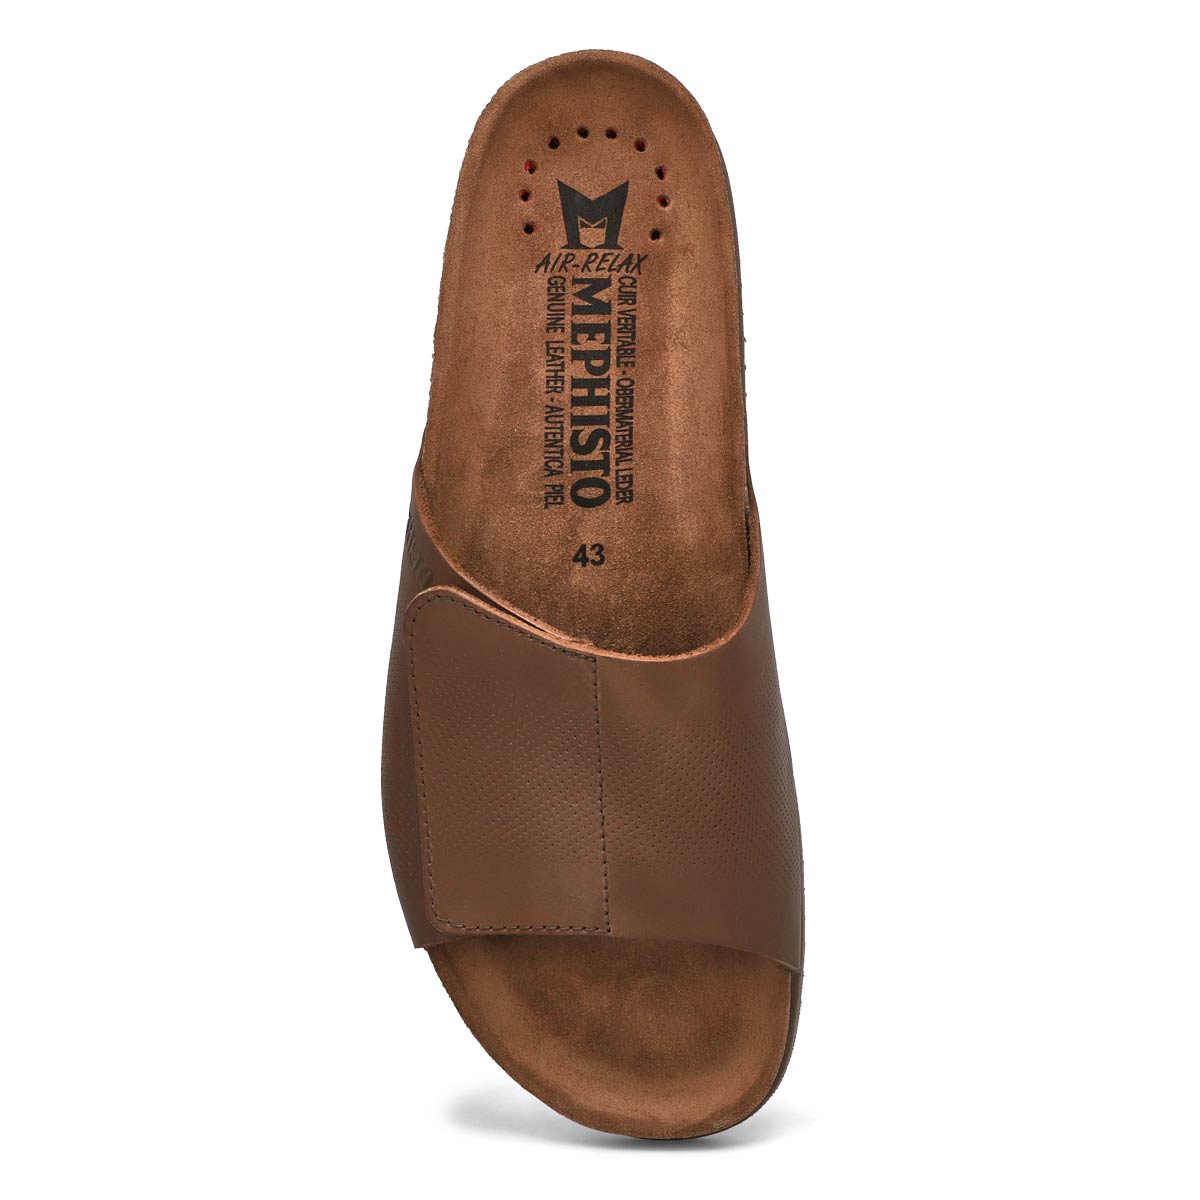 Men's Nilton Footbed Sandal - Dark Brown